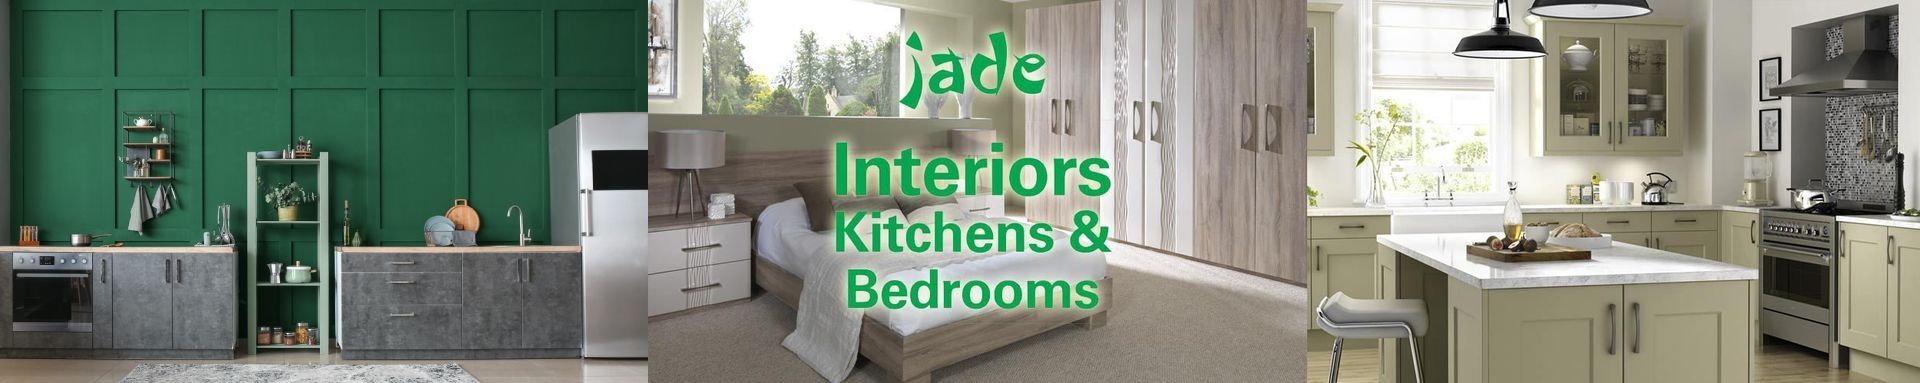 Jade Interiors